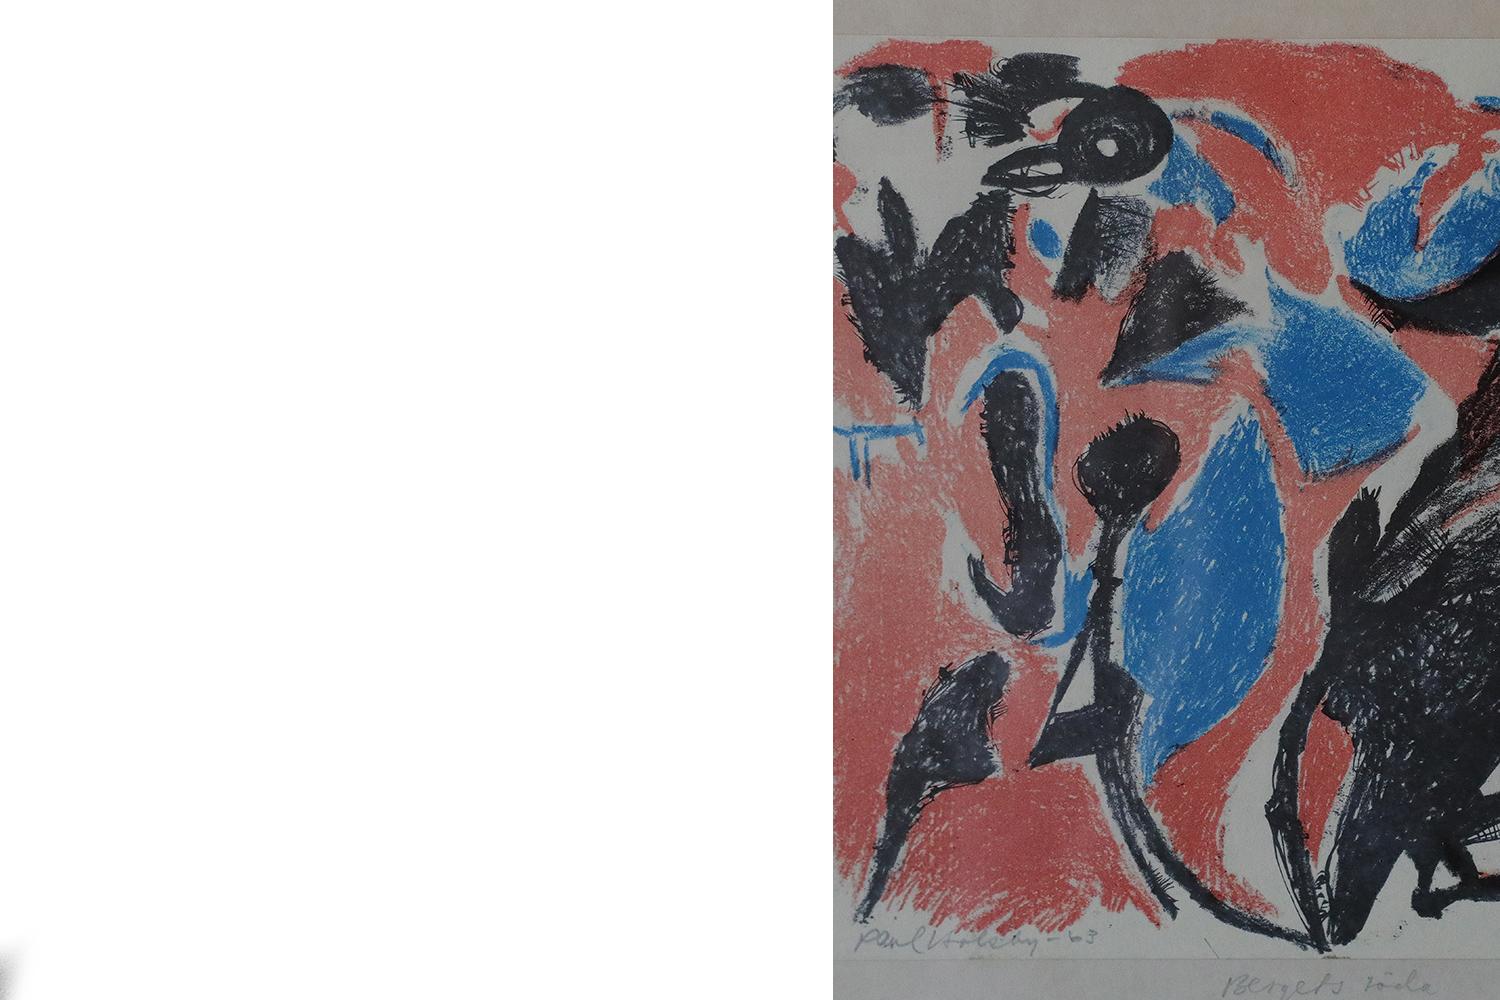 Paul Holsby, Bergets röda, Farblithographie, 1963, gerahmt (Mitte des 20. Jahrhunderts) im Angebot